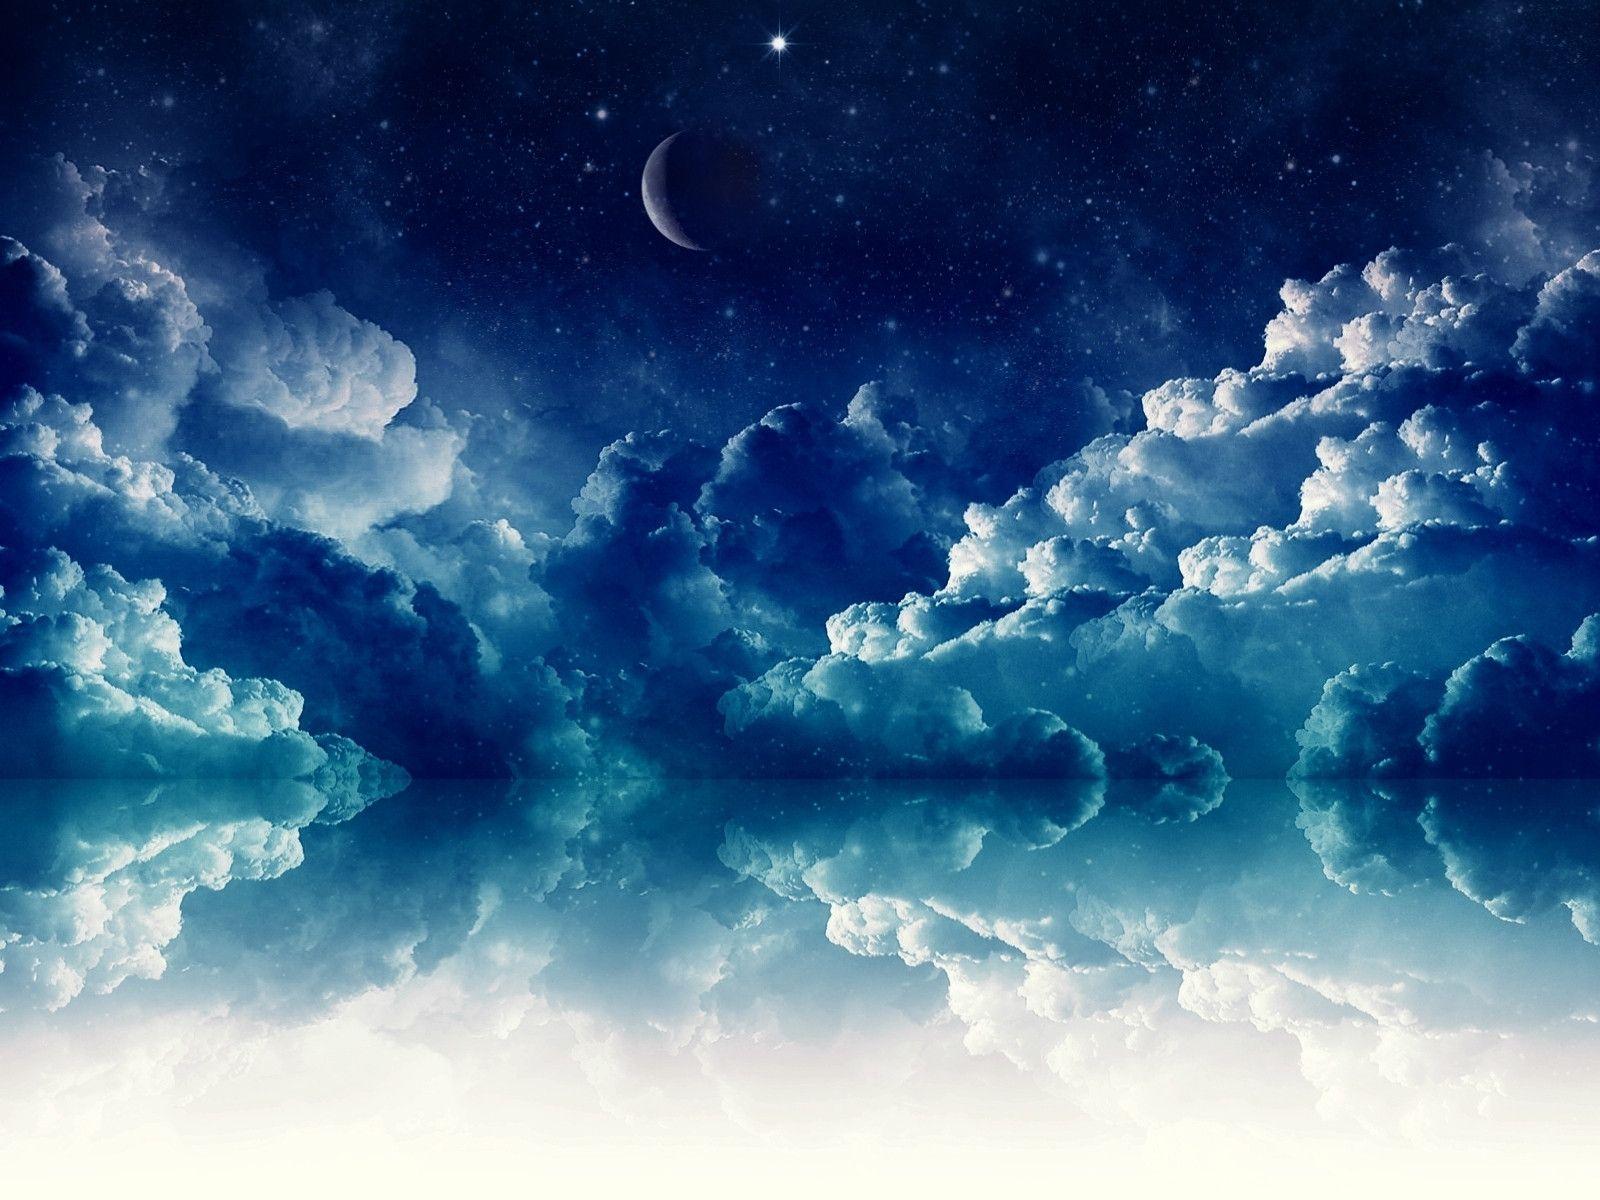 Moon And Stars Wallpaper Download 25507 HD Picture. Best Desktop